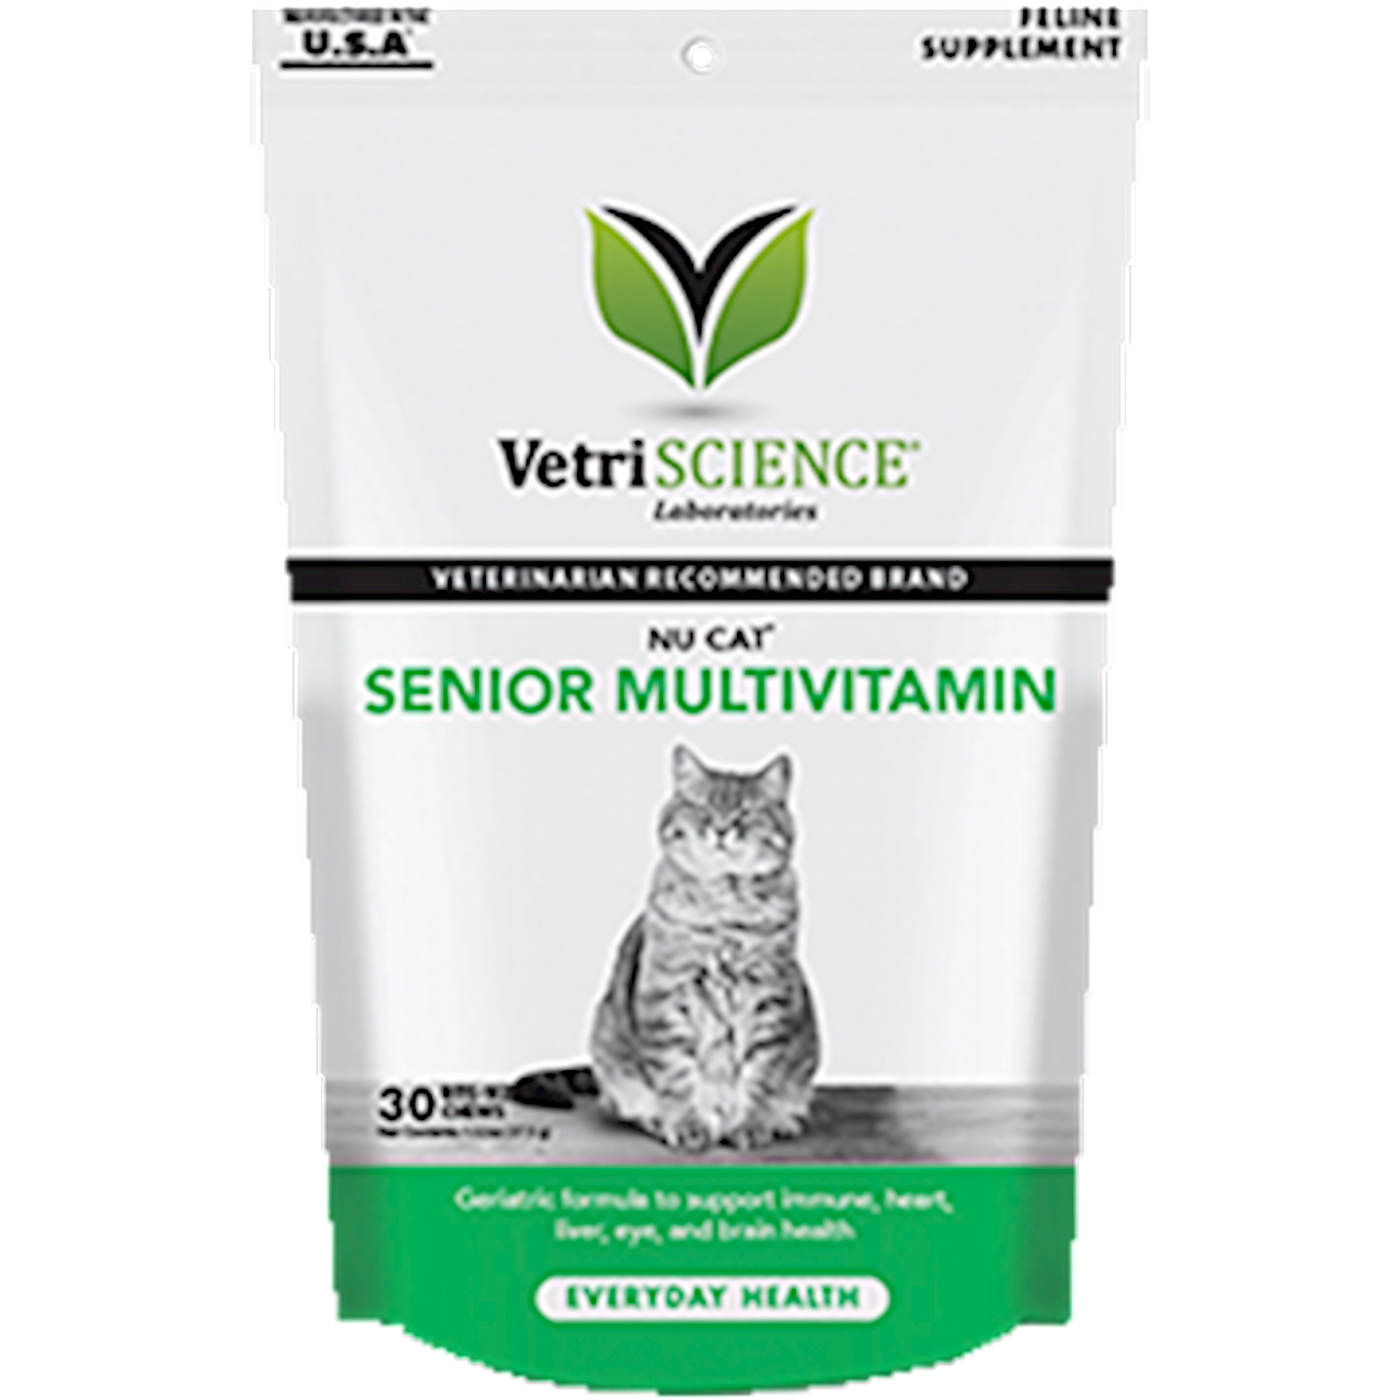 NuCat Senior Cat Multi 30 chew tabs Curated Wellness